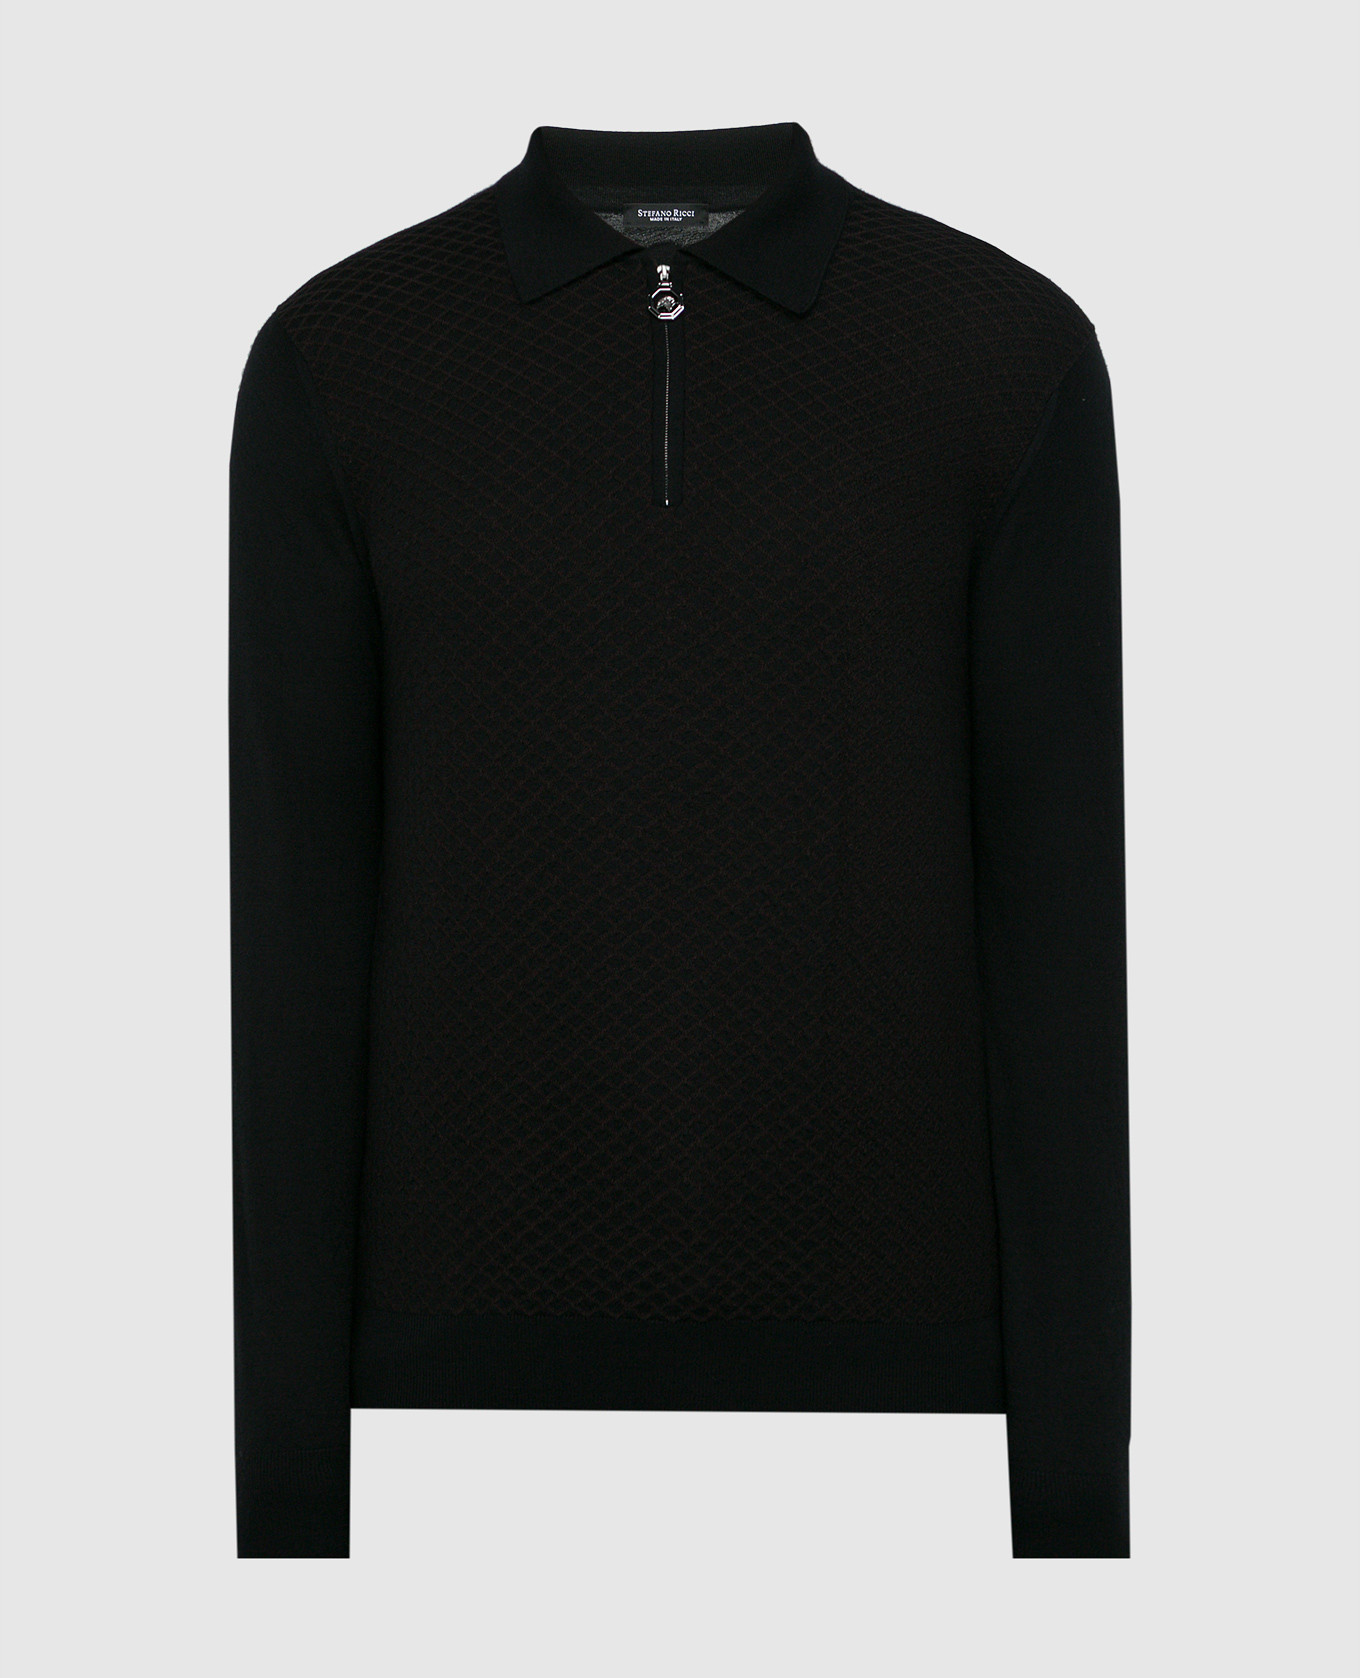 Black patterned cashmere and silk jumper